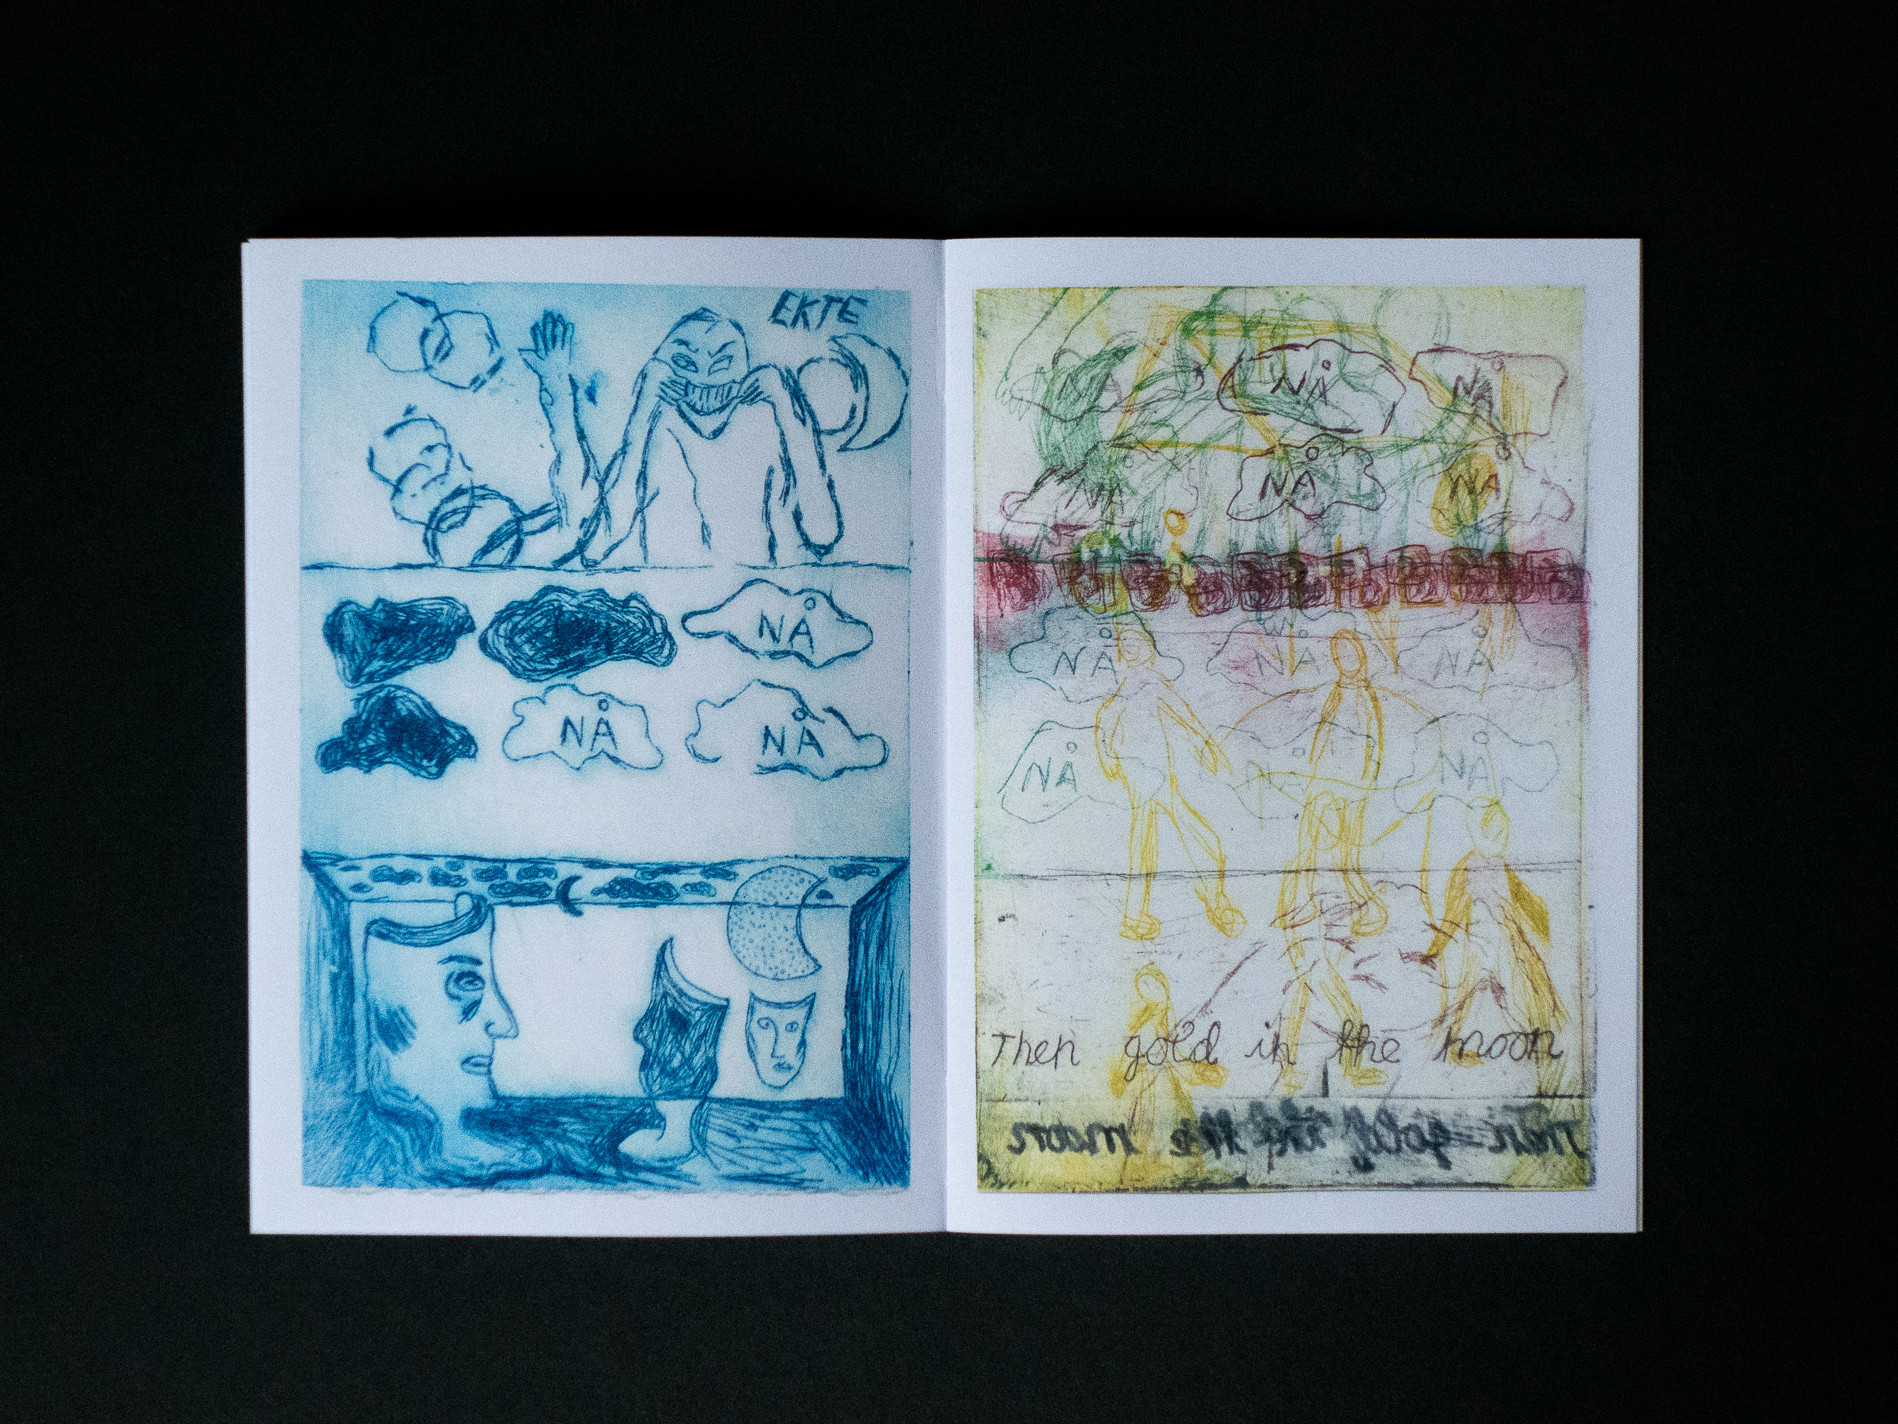 Printed fanzine containing Urd J Pedersens gravure etching prints.